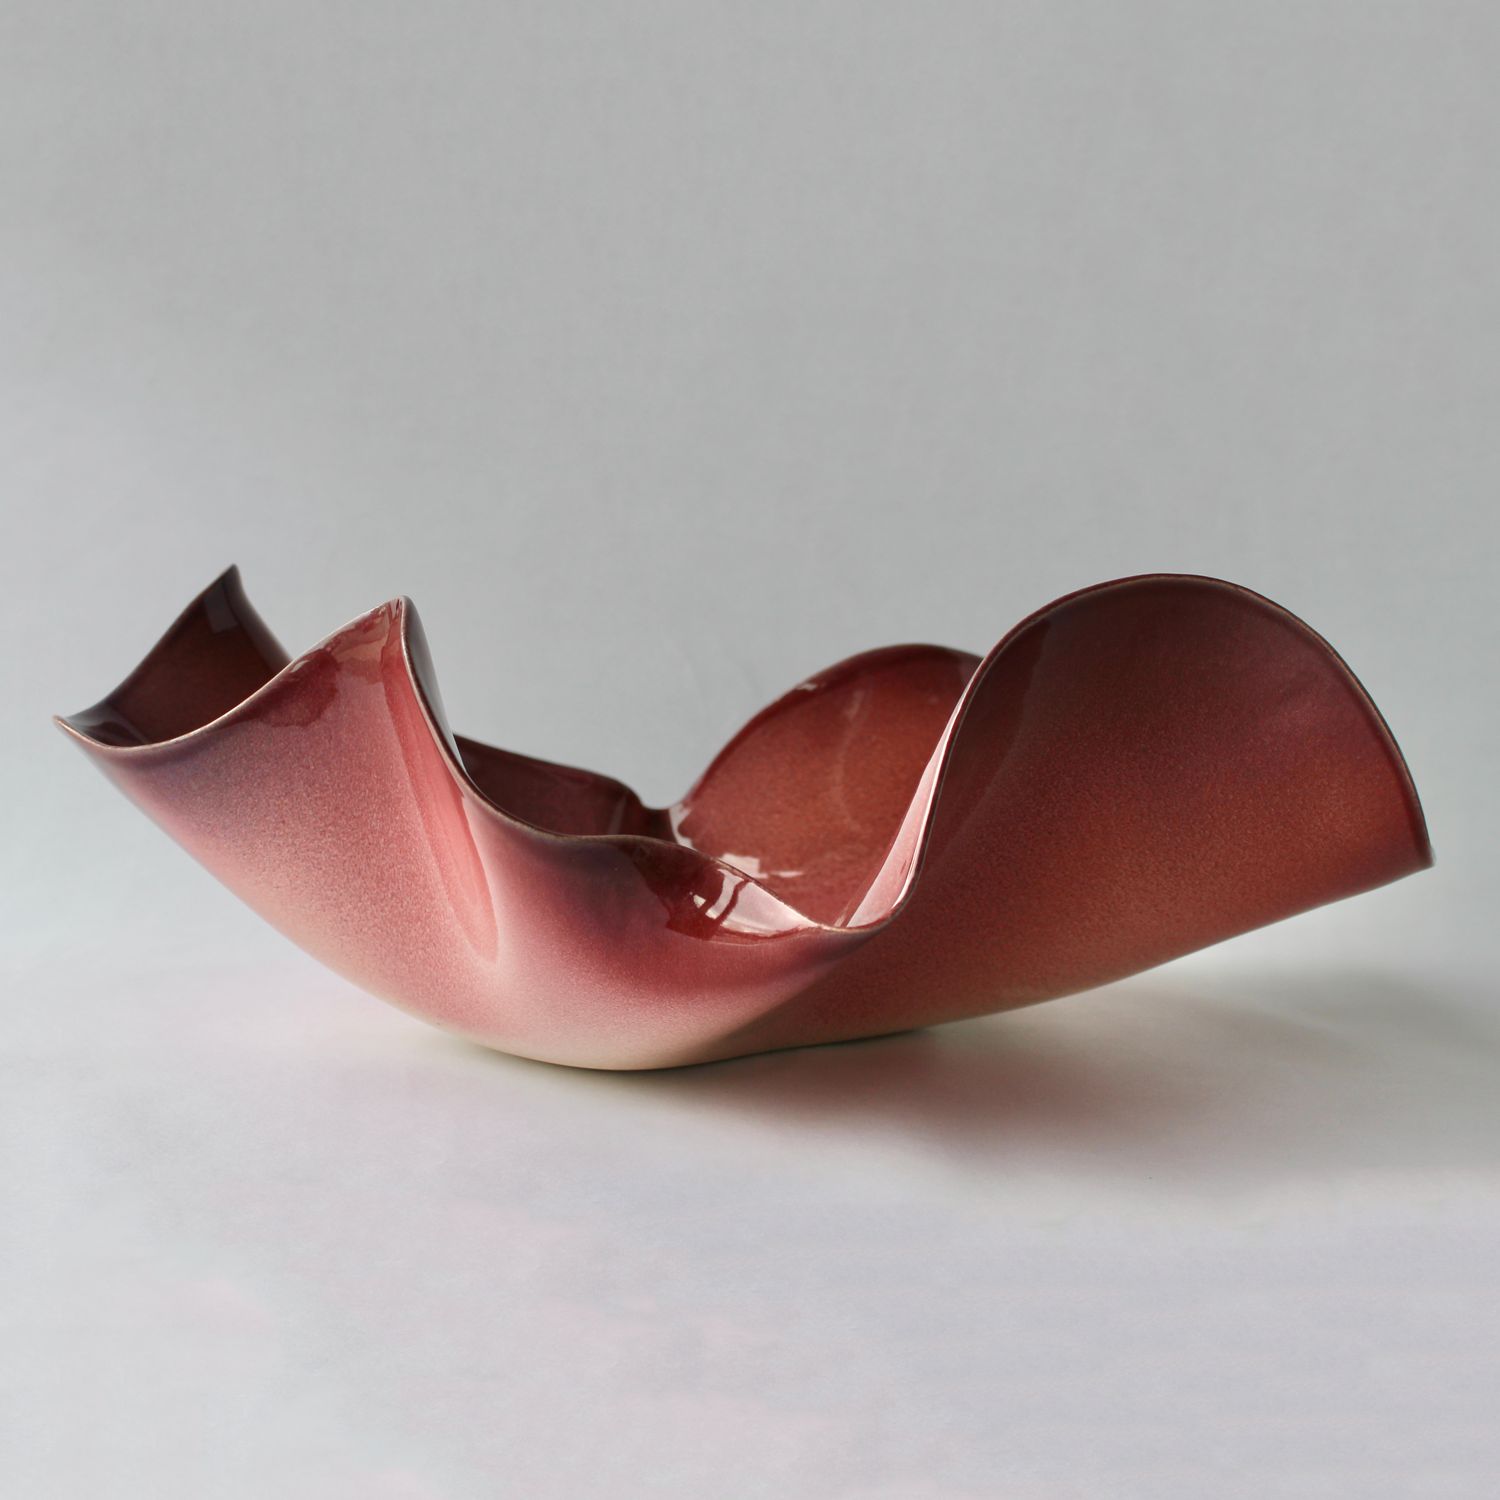 Annika Hoefs: Blooming Bowl – Merlot Product Image 1 of 1